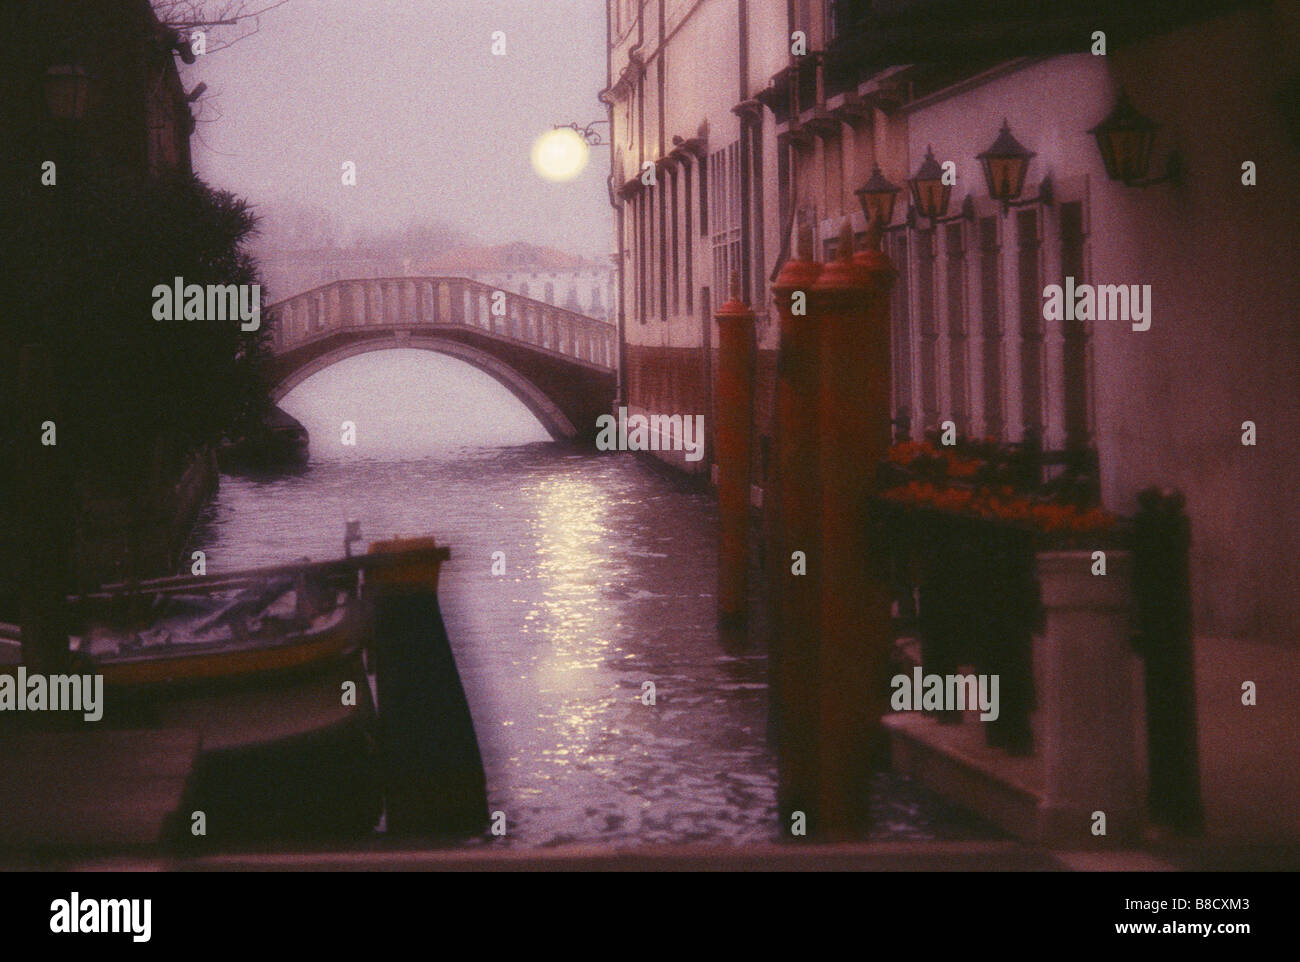 FV2134, David Nunuk; Venice canal scene Stock Photo